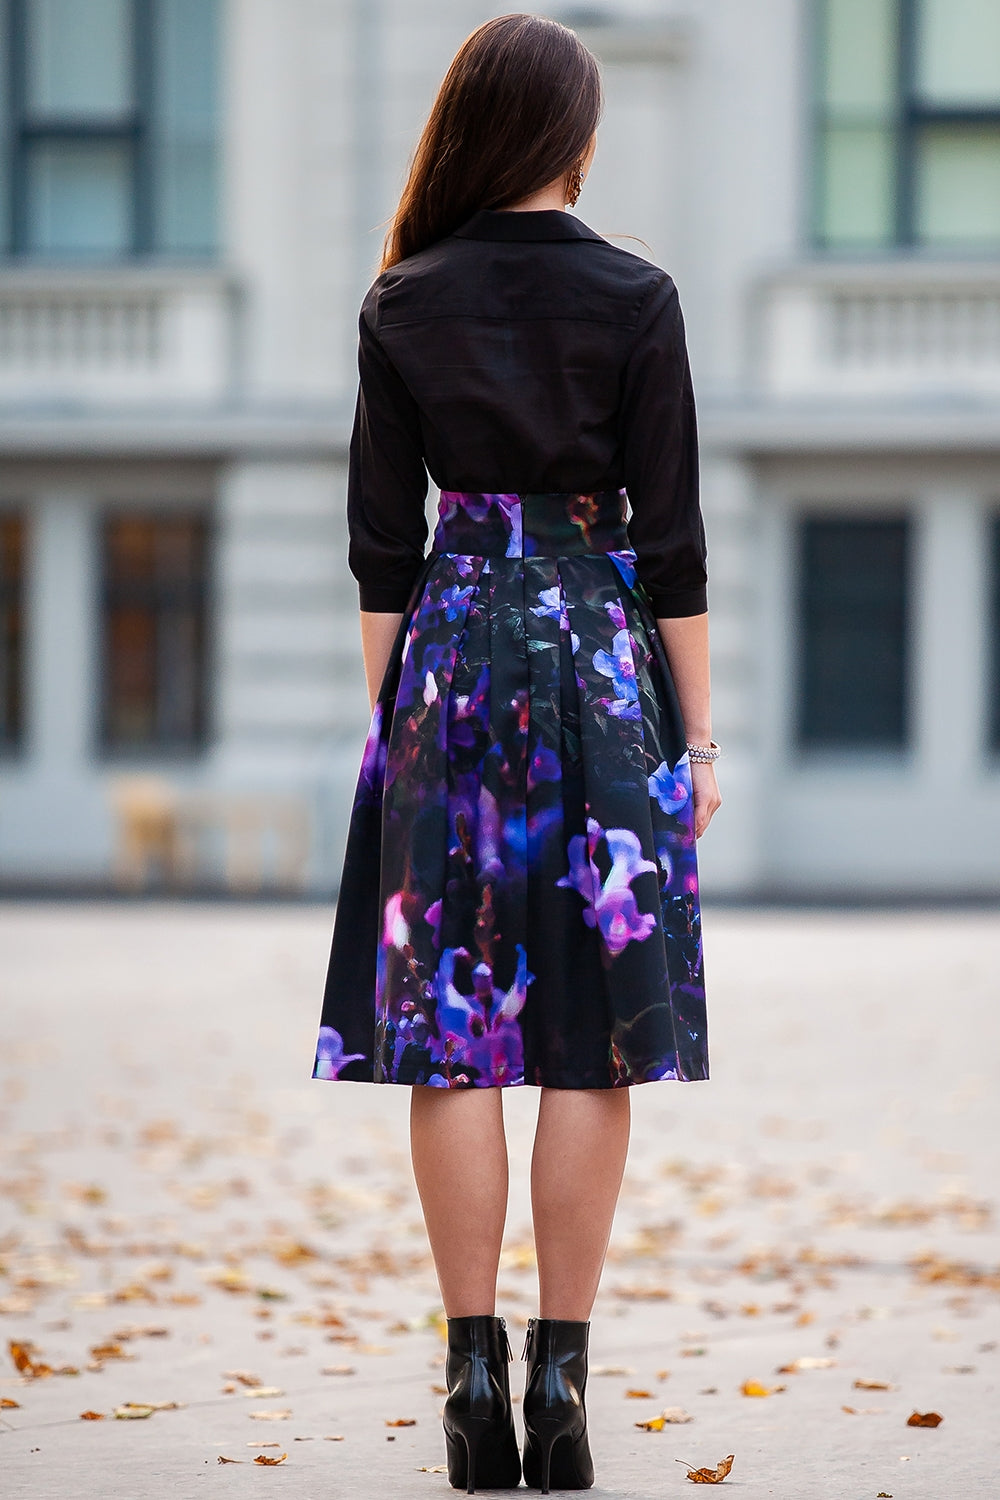 Midi skirts with purple flower print